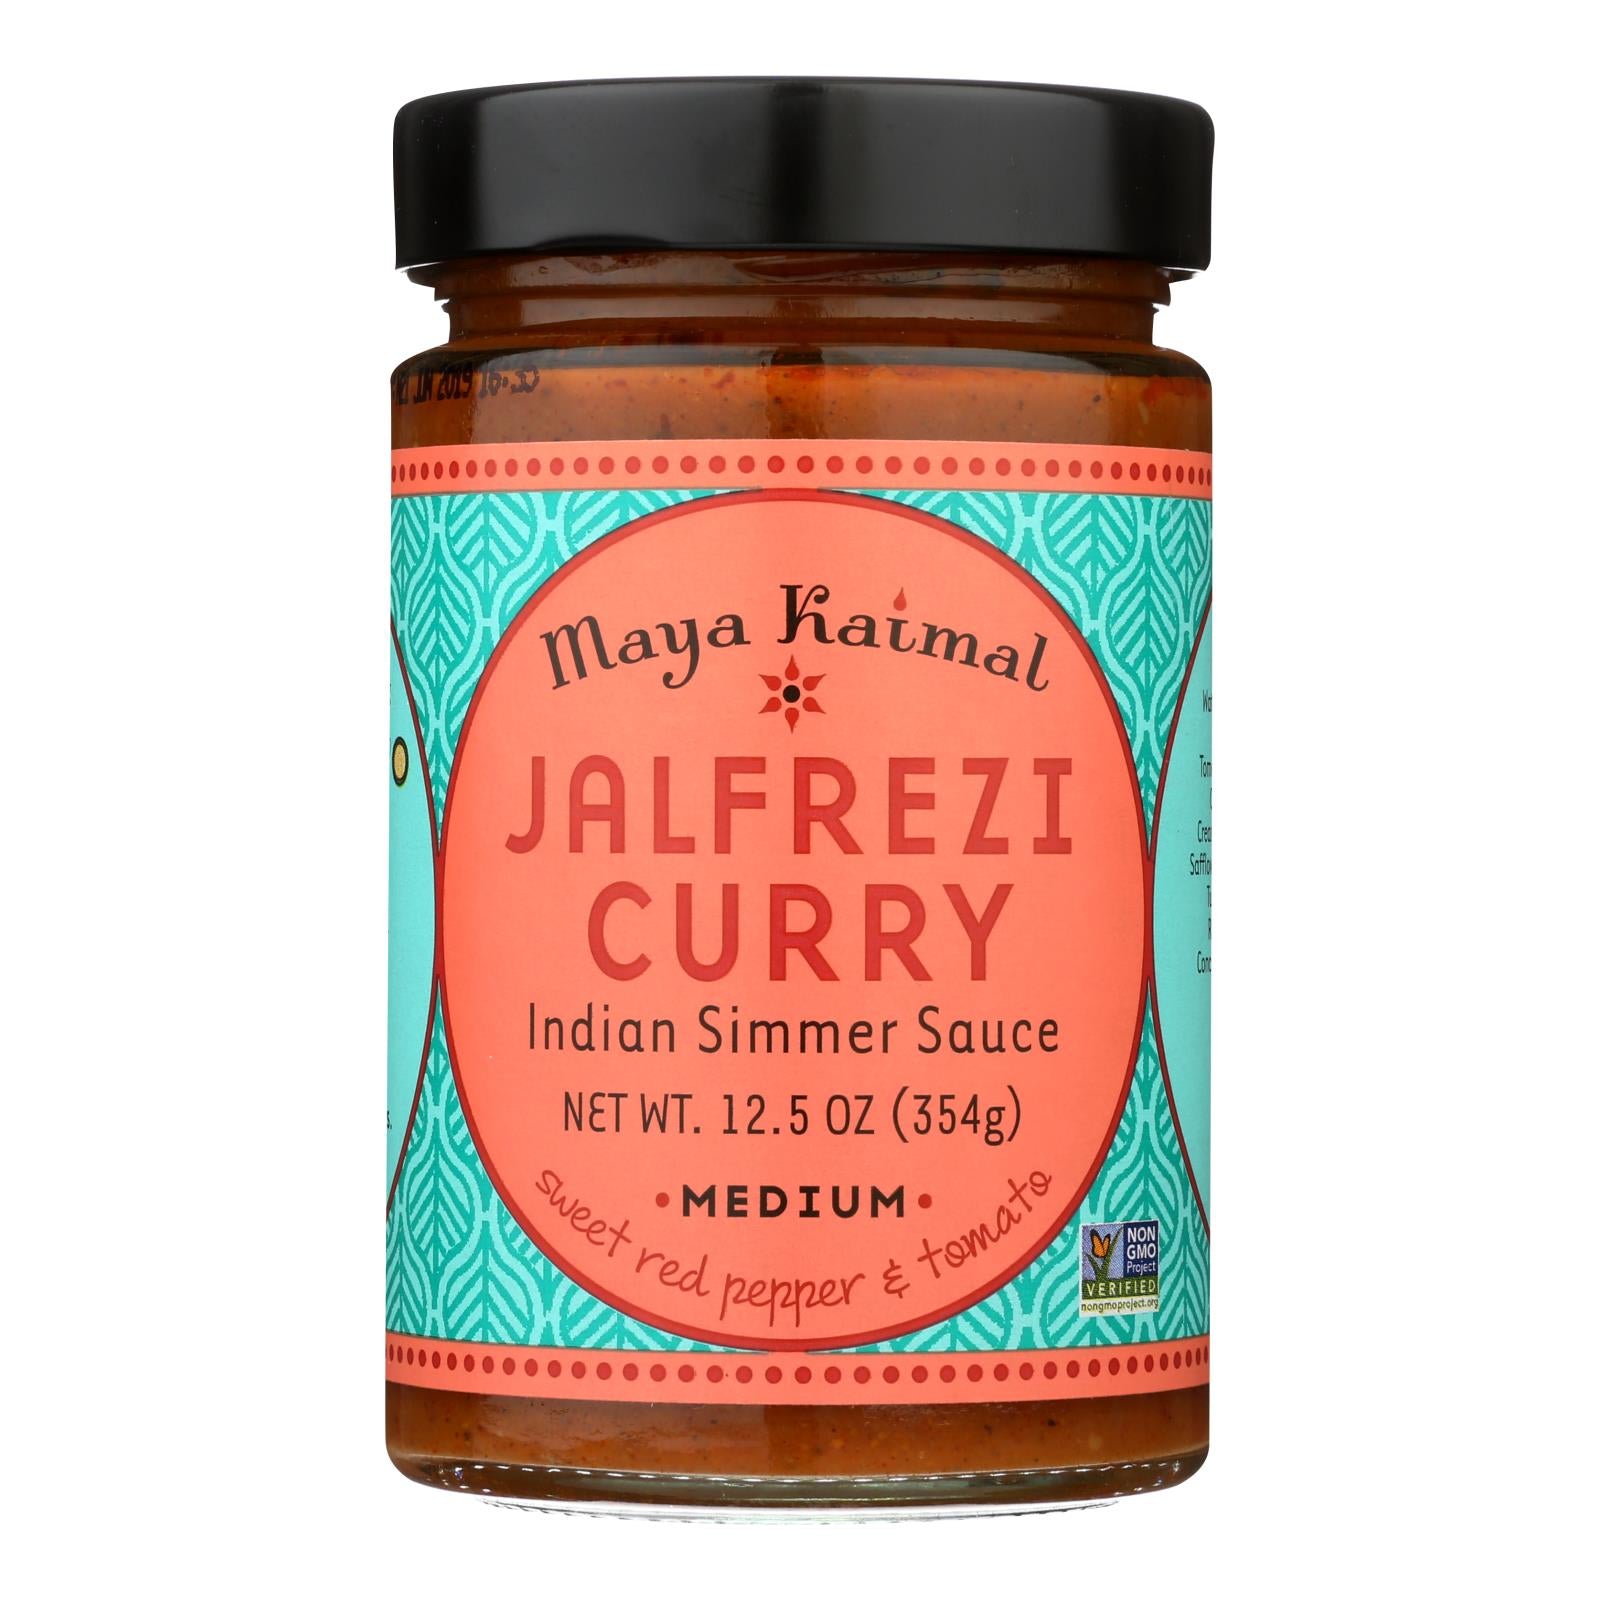 Maya Kaimal, Maya Kaimal Sauce indienne pour mijoter - Jalfrezi Curry - Carton de 6 - 12.5 oz. (Pack de 6)